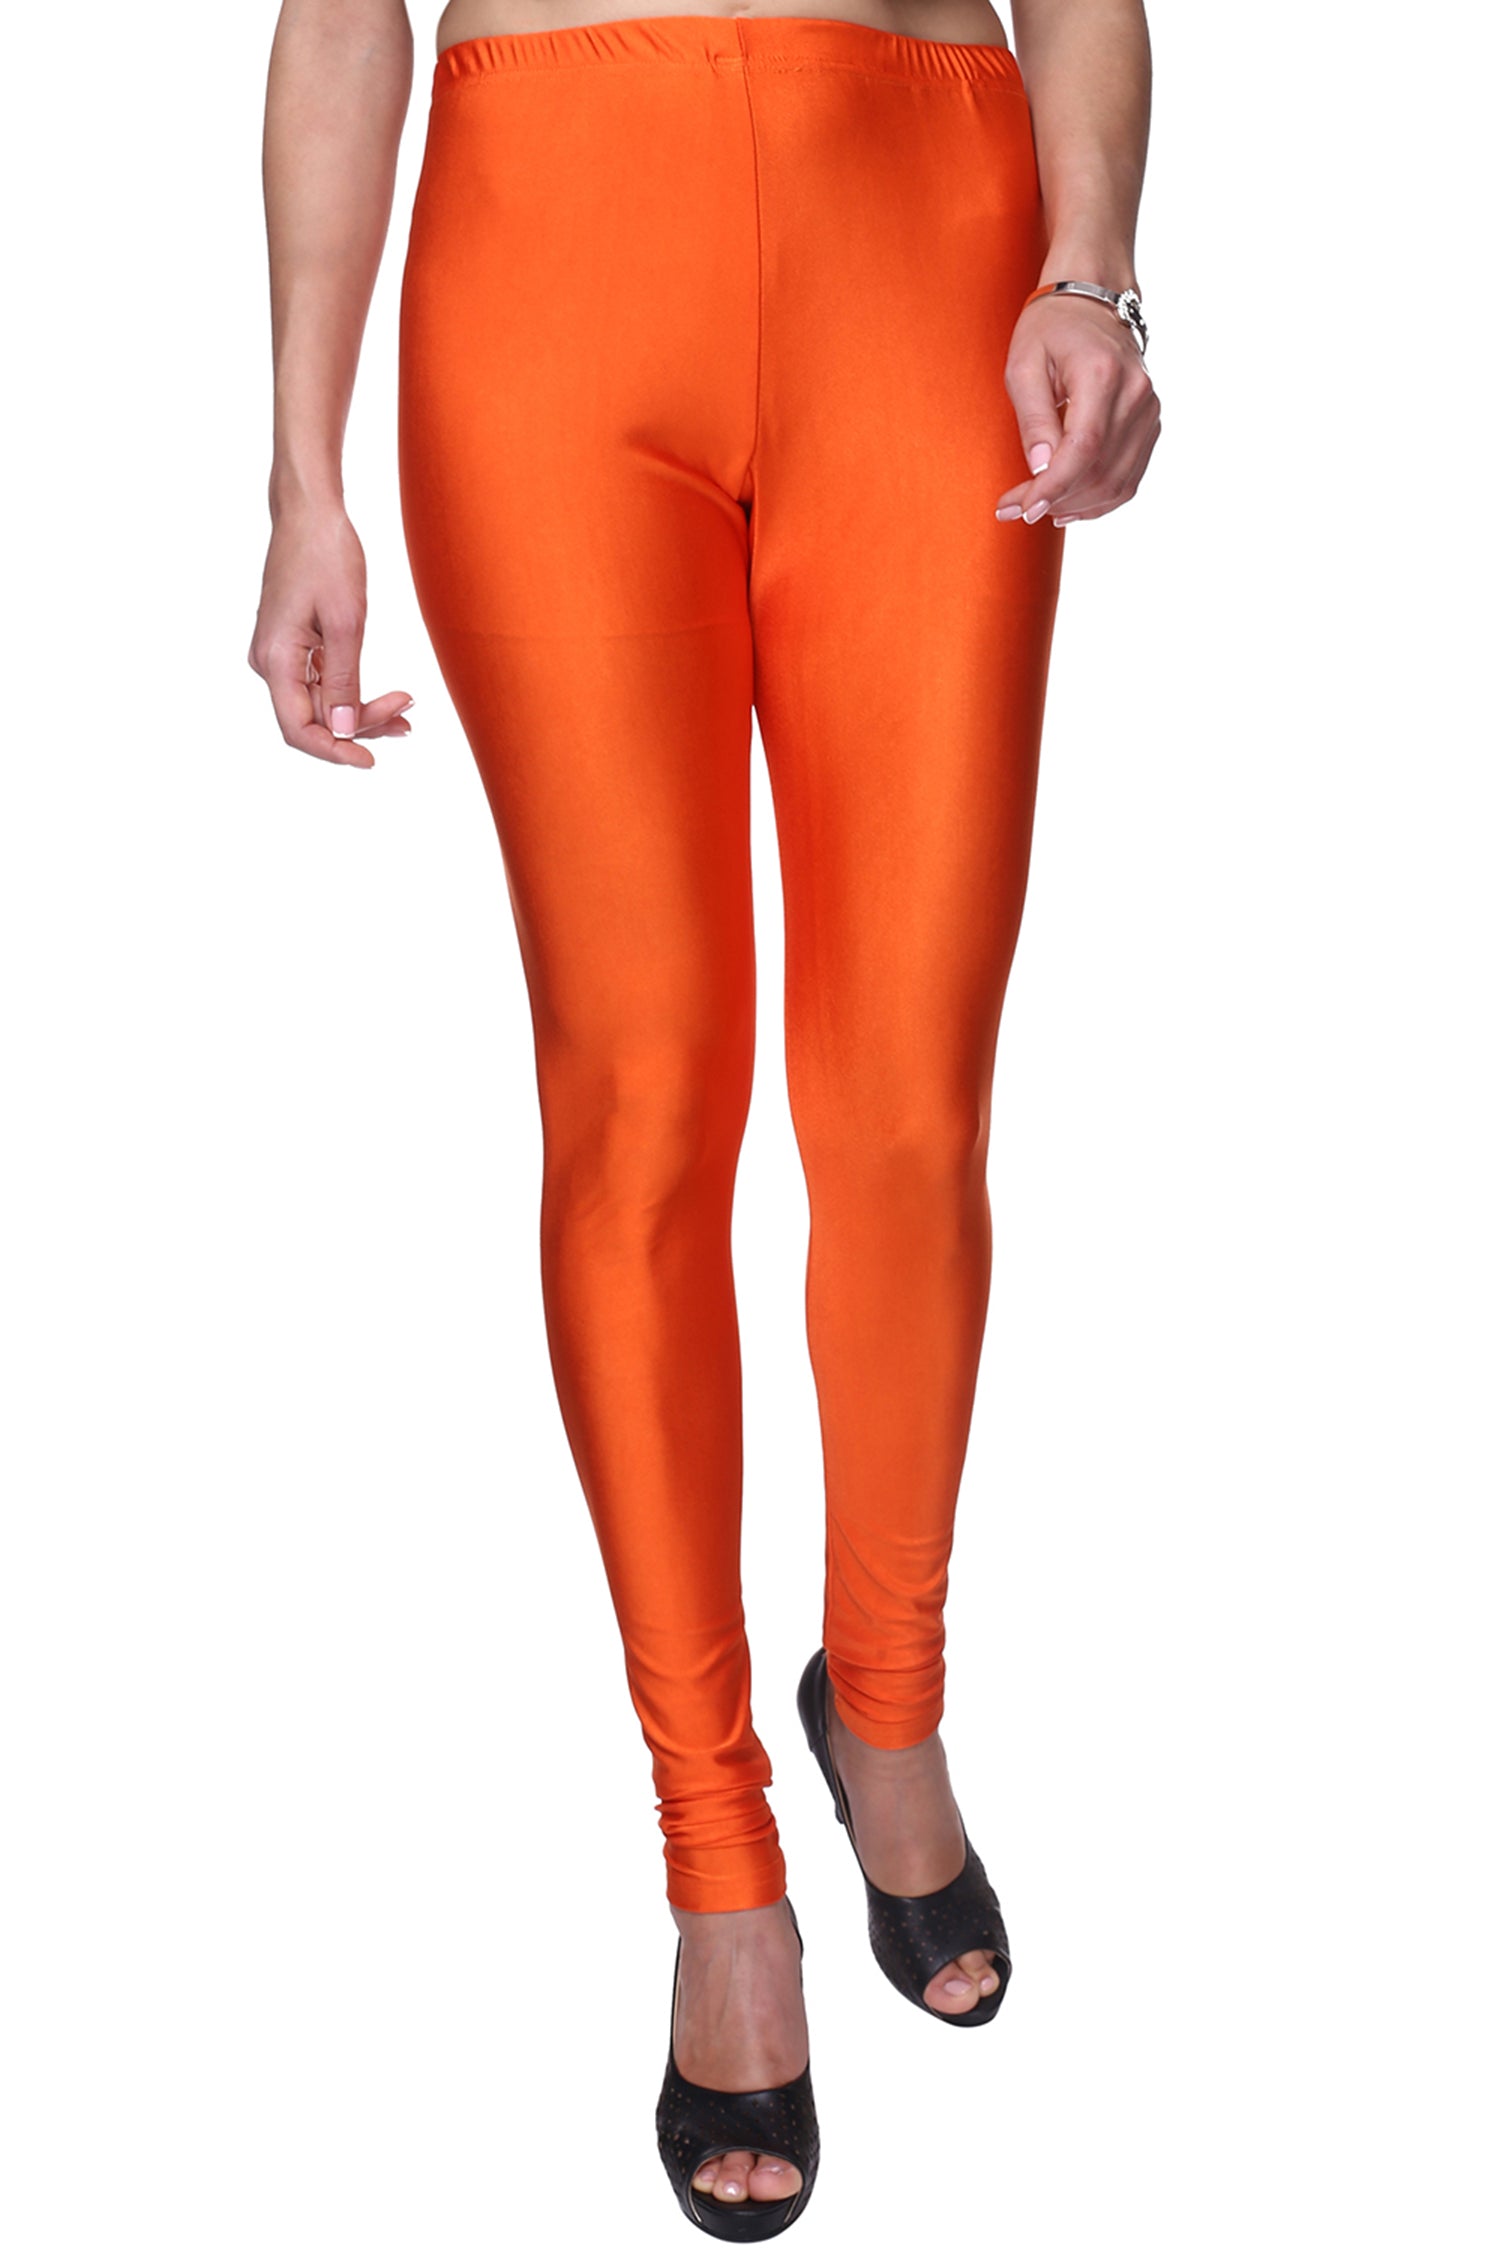 Trasa Shining Lycra Women's and Girls Full Length Churidar Leggings- Orange